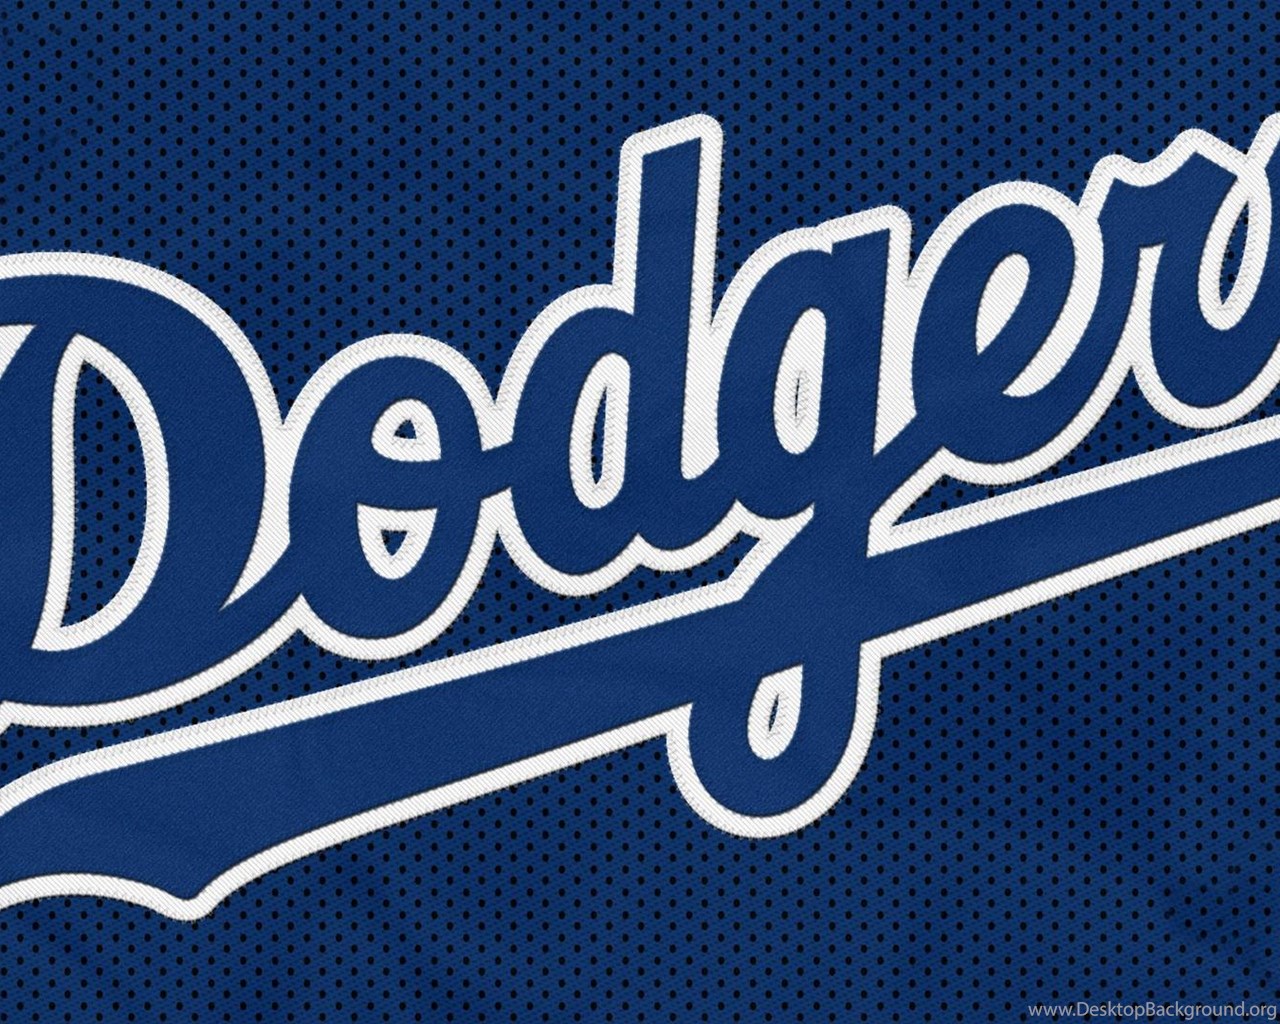 Los angeles dodgers. Jammie Dodgers логотип. La Dodgers logo Black. Доджер логотип Тверь. Los Angeles Dodgers logo 3d.